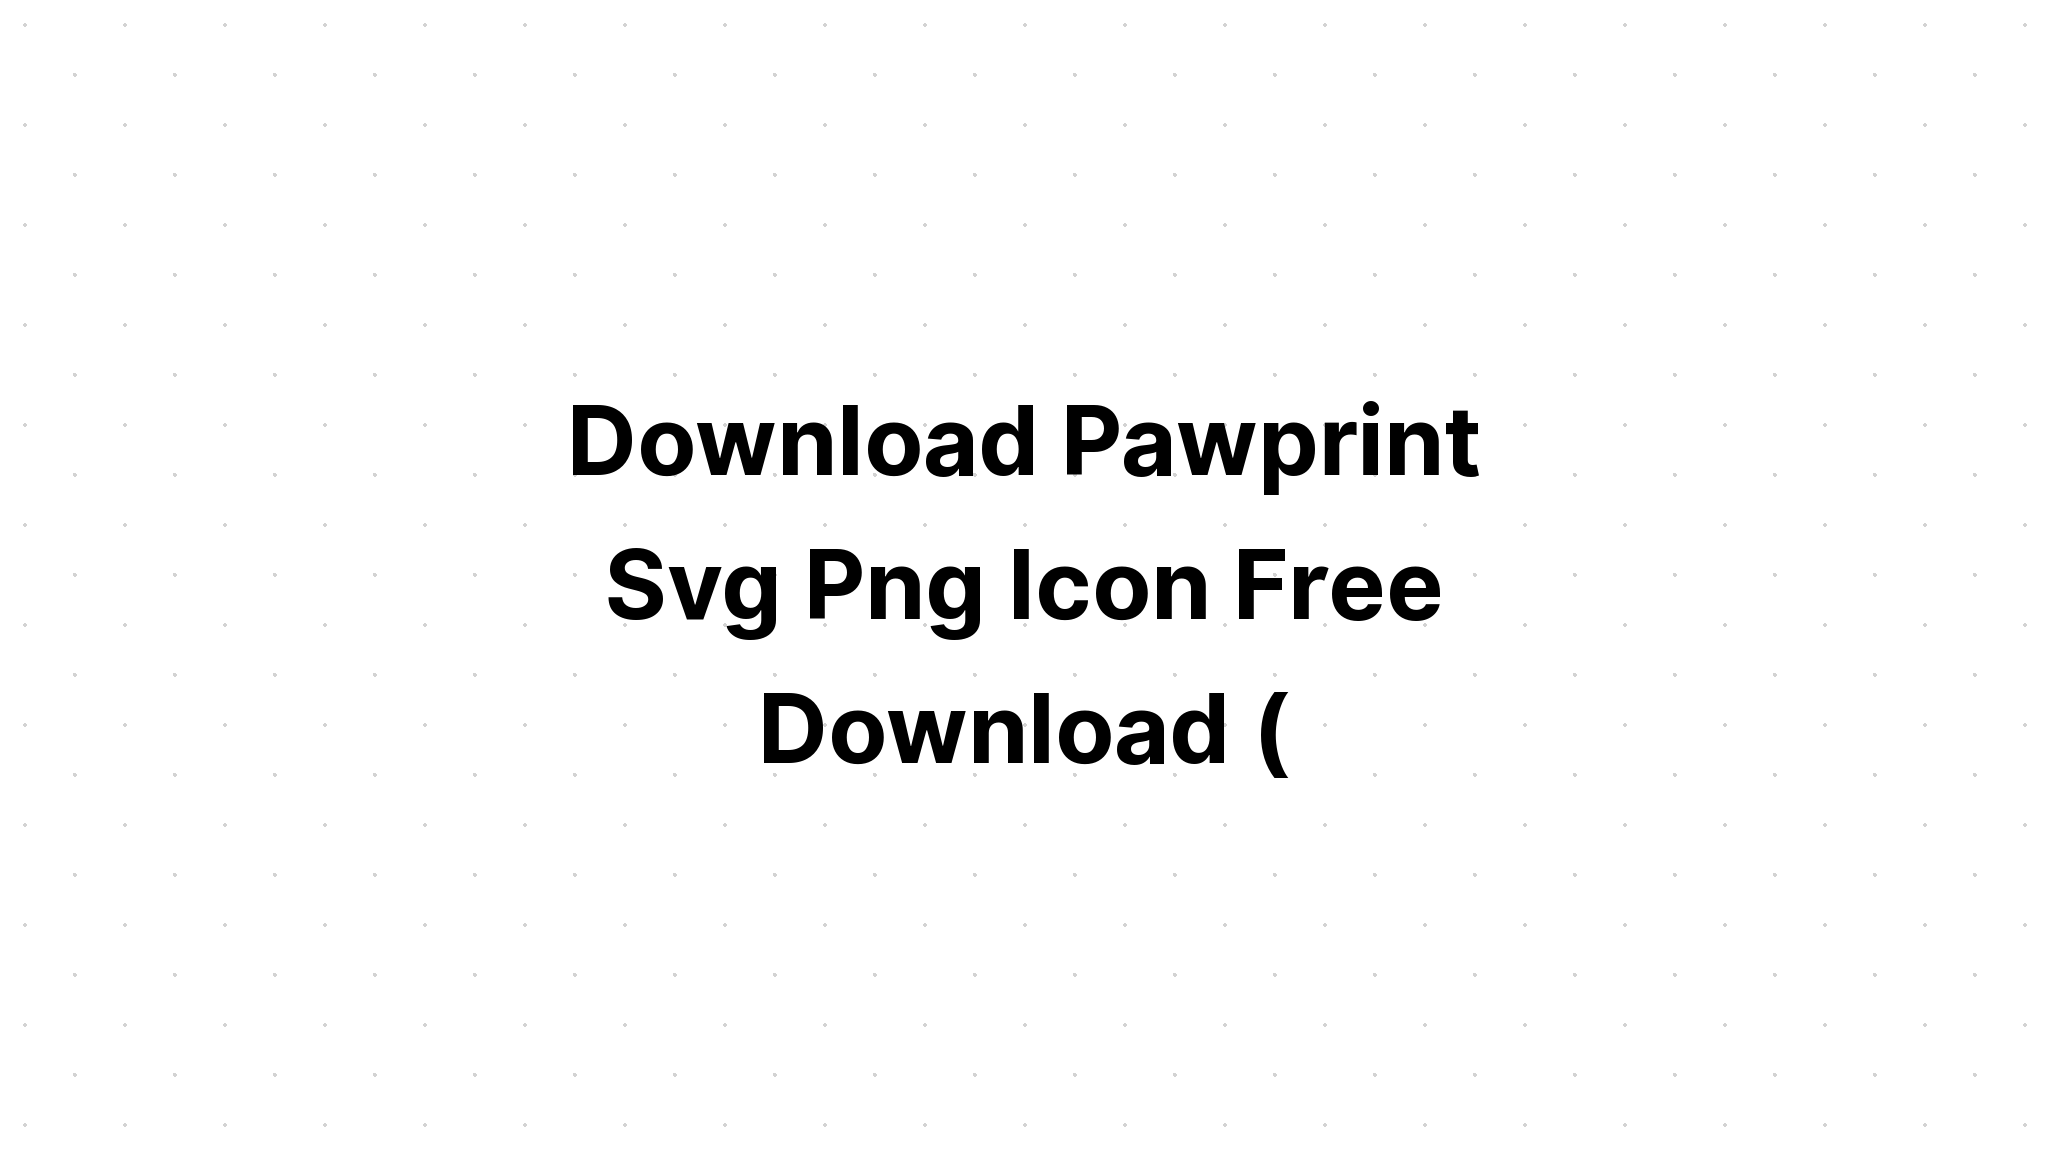 Download Pawprint Svg Free - Layered SVG Cut File